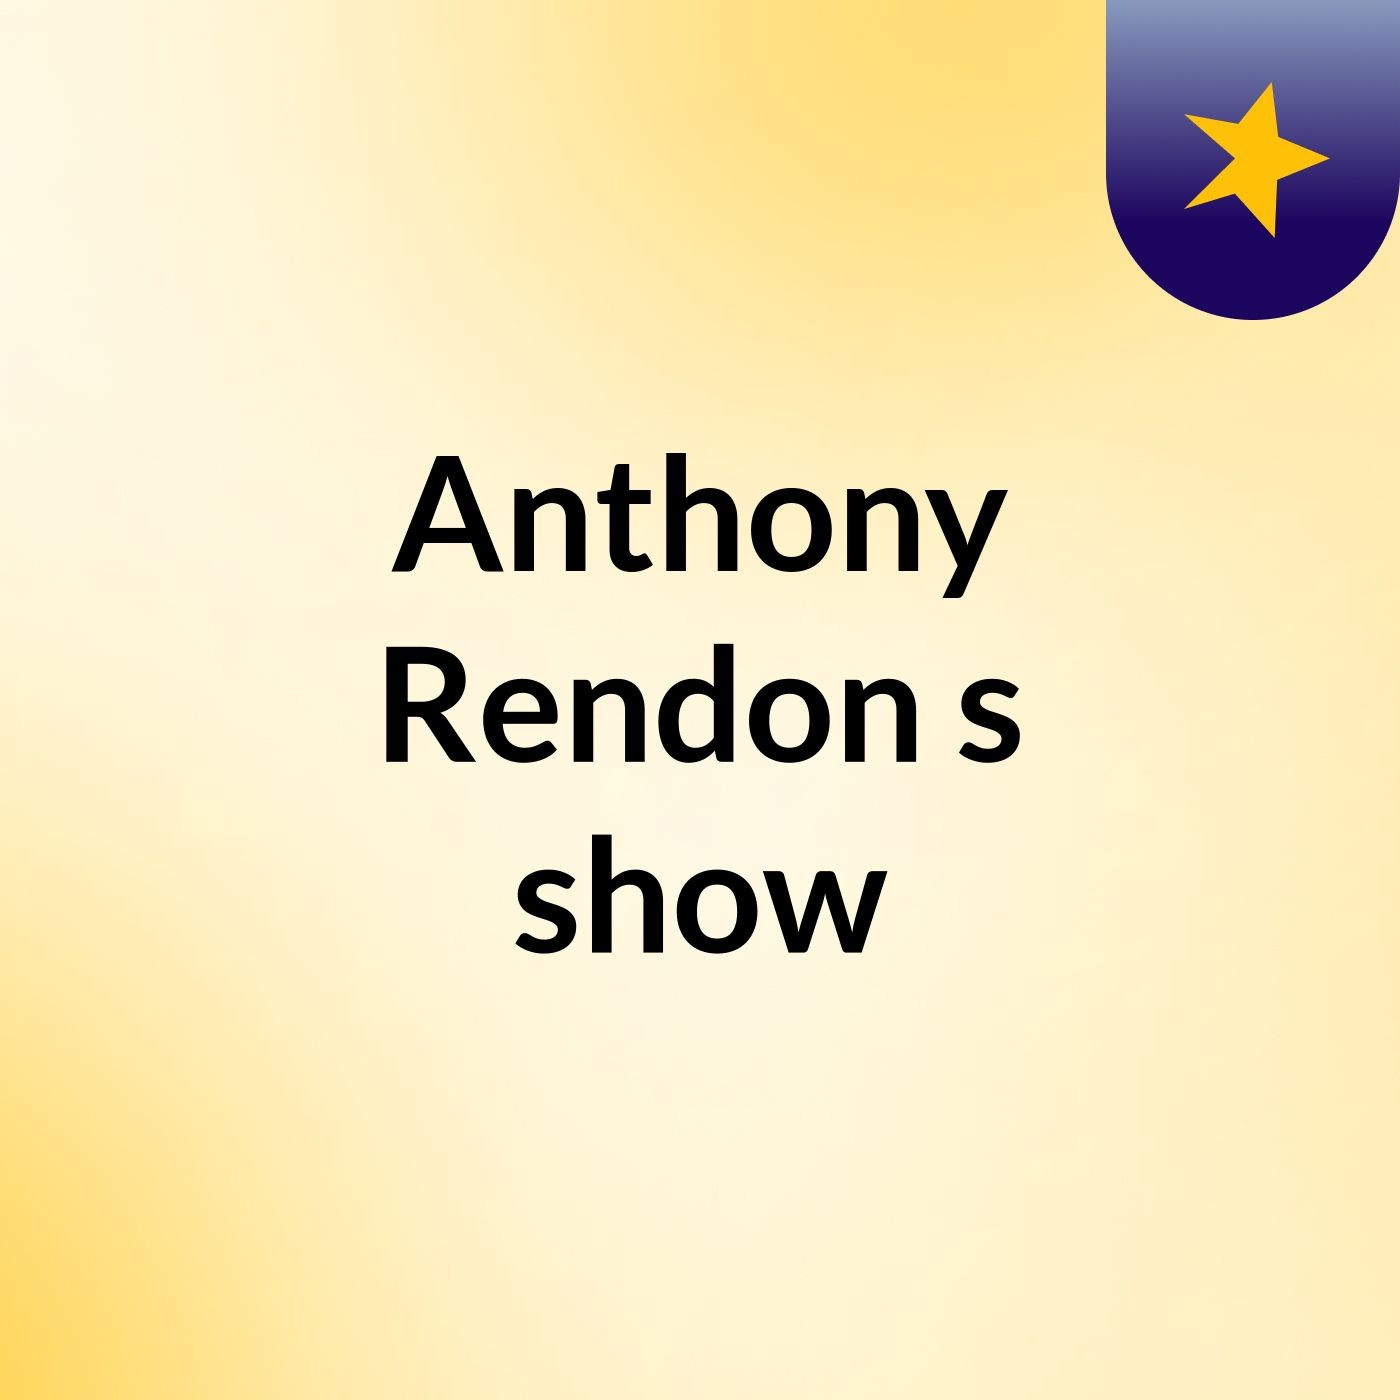 Anthony Rendon's show